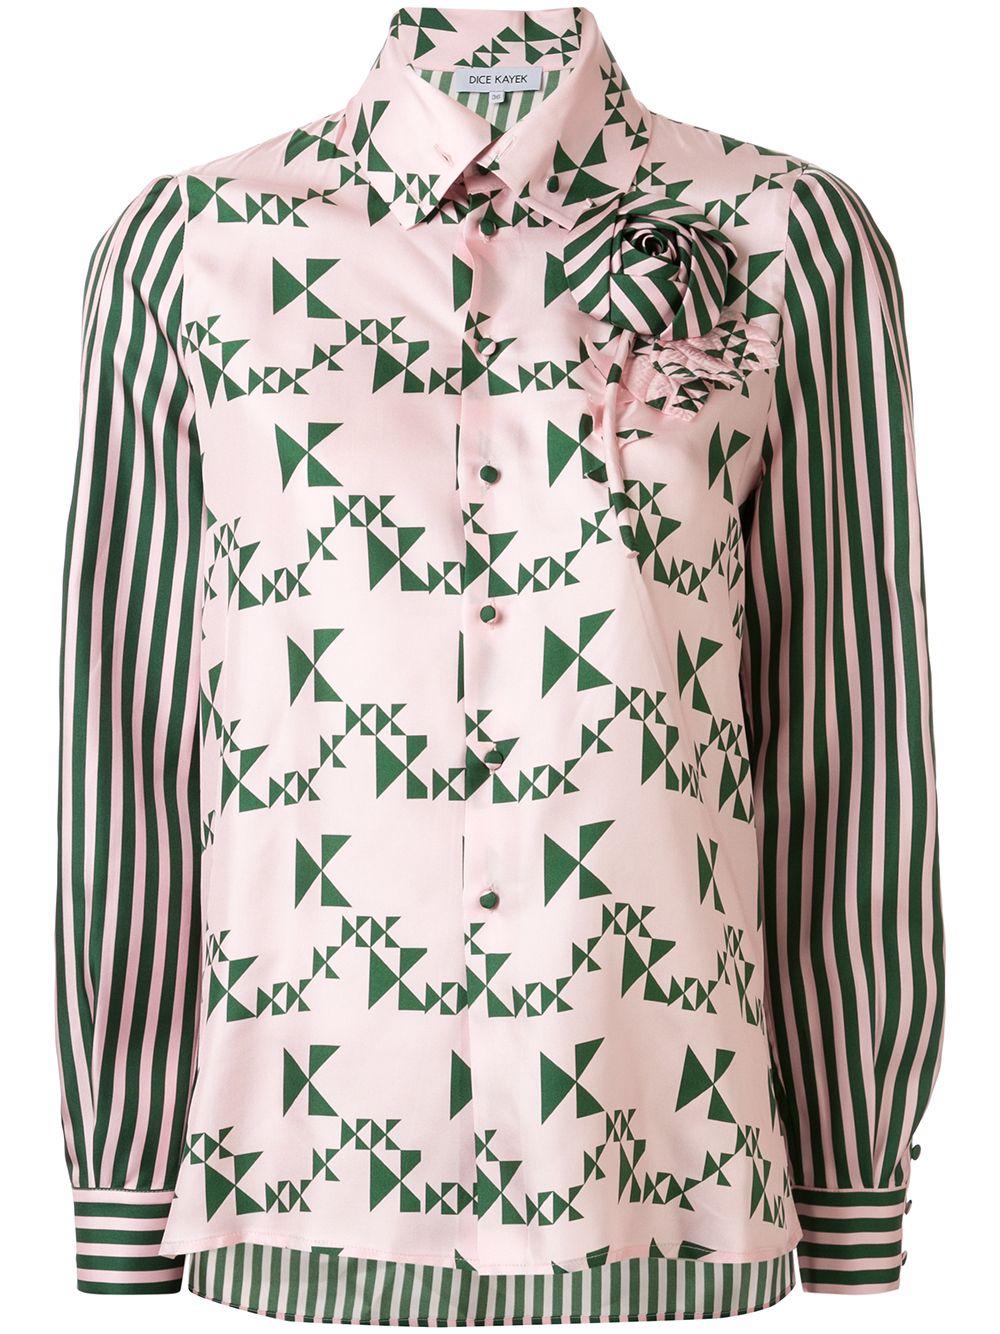 Dice Kayek Monogram Striped Silk Shirt Green Pink Geometric Flower